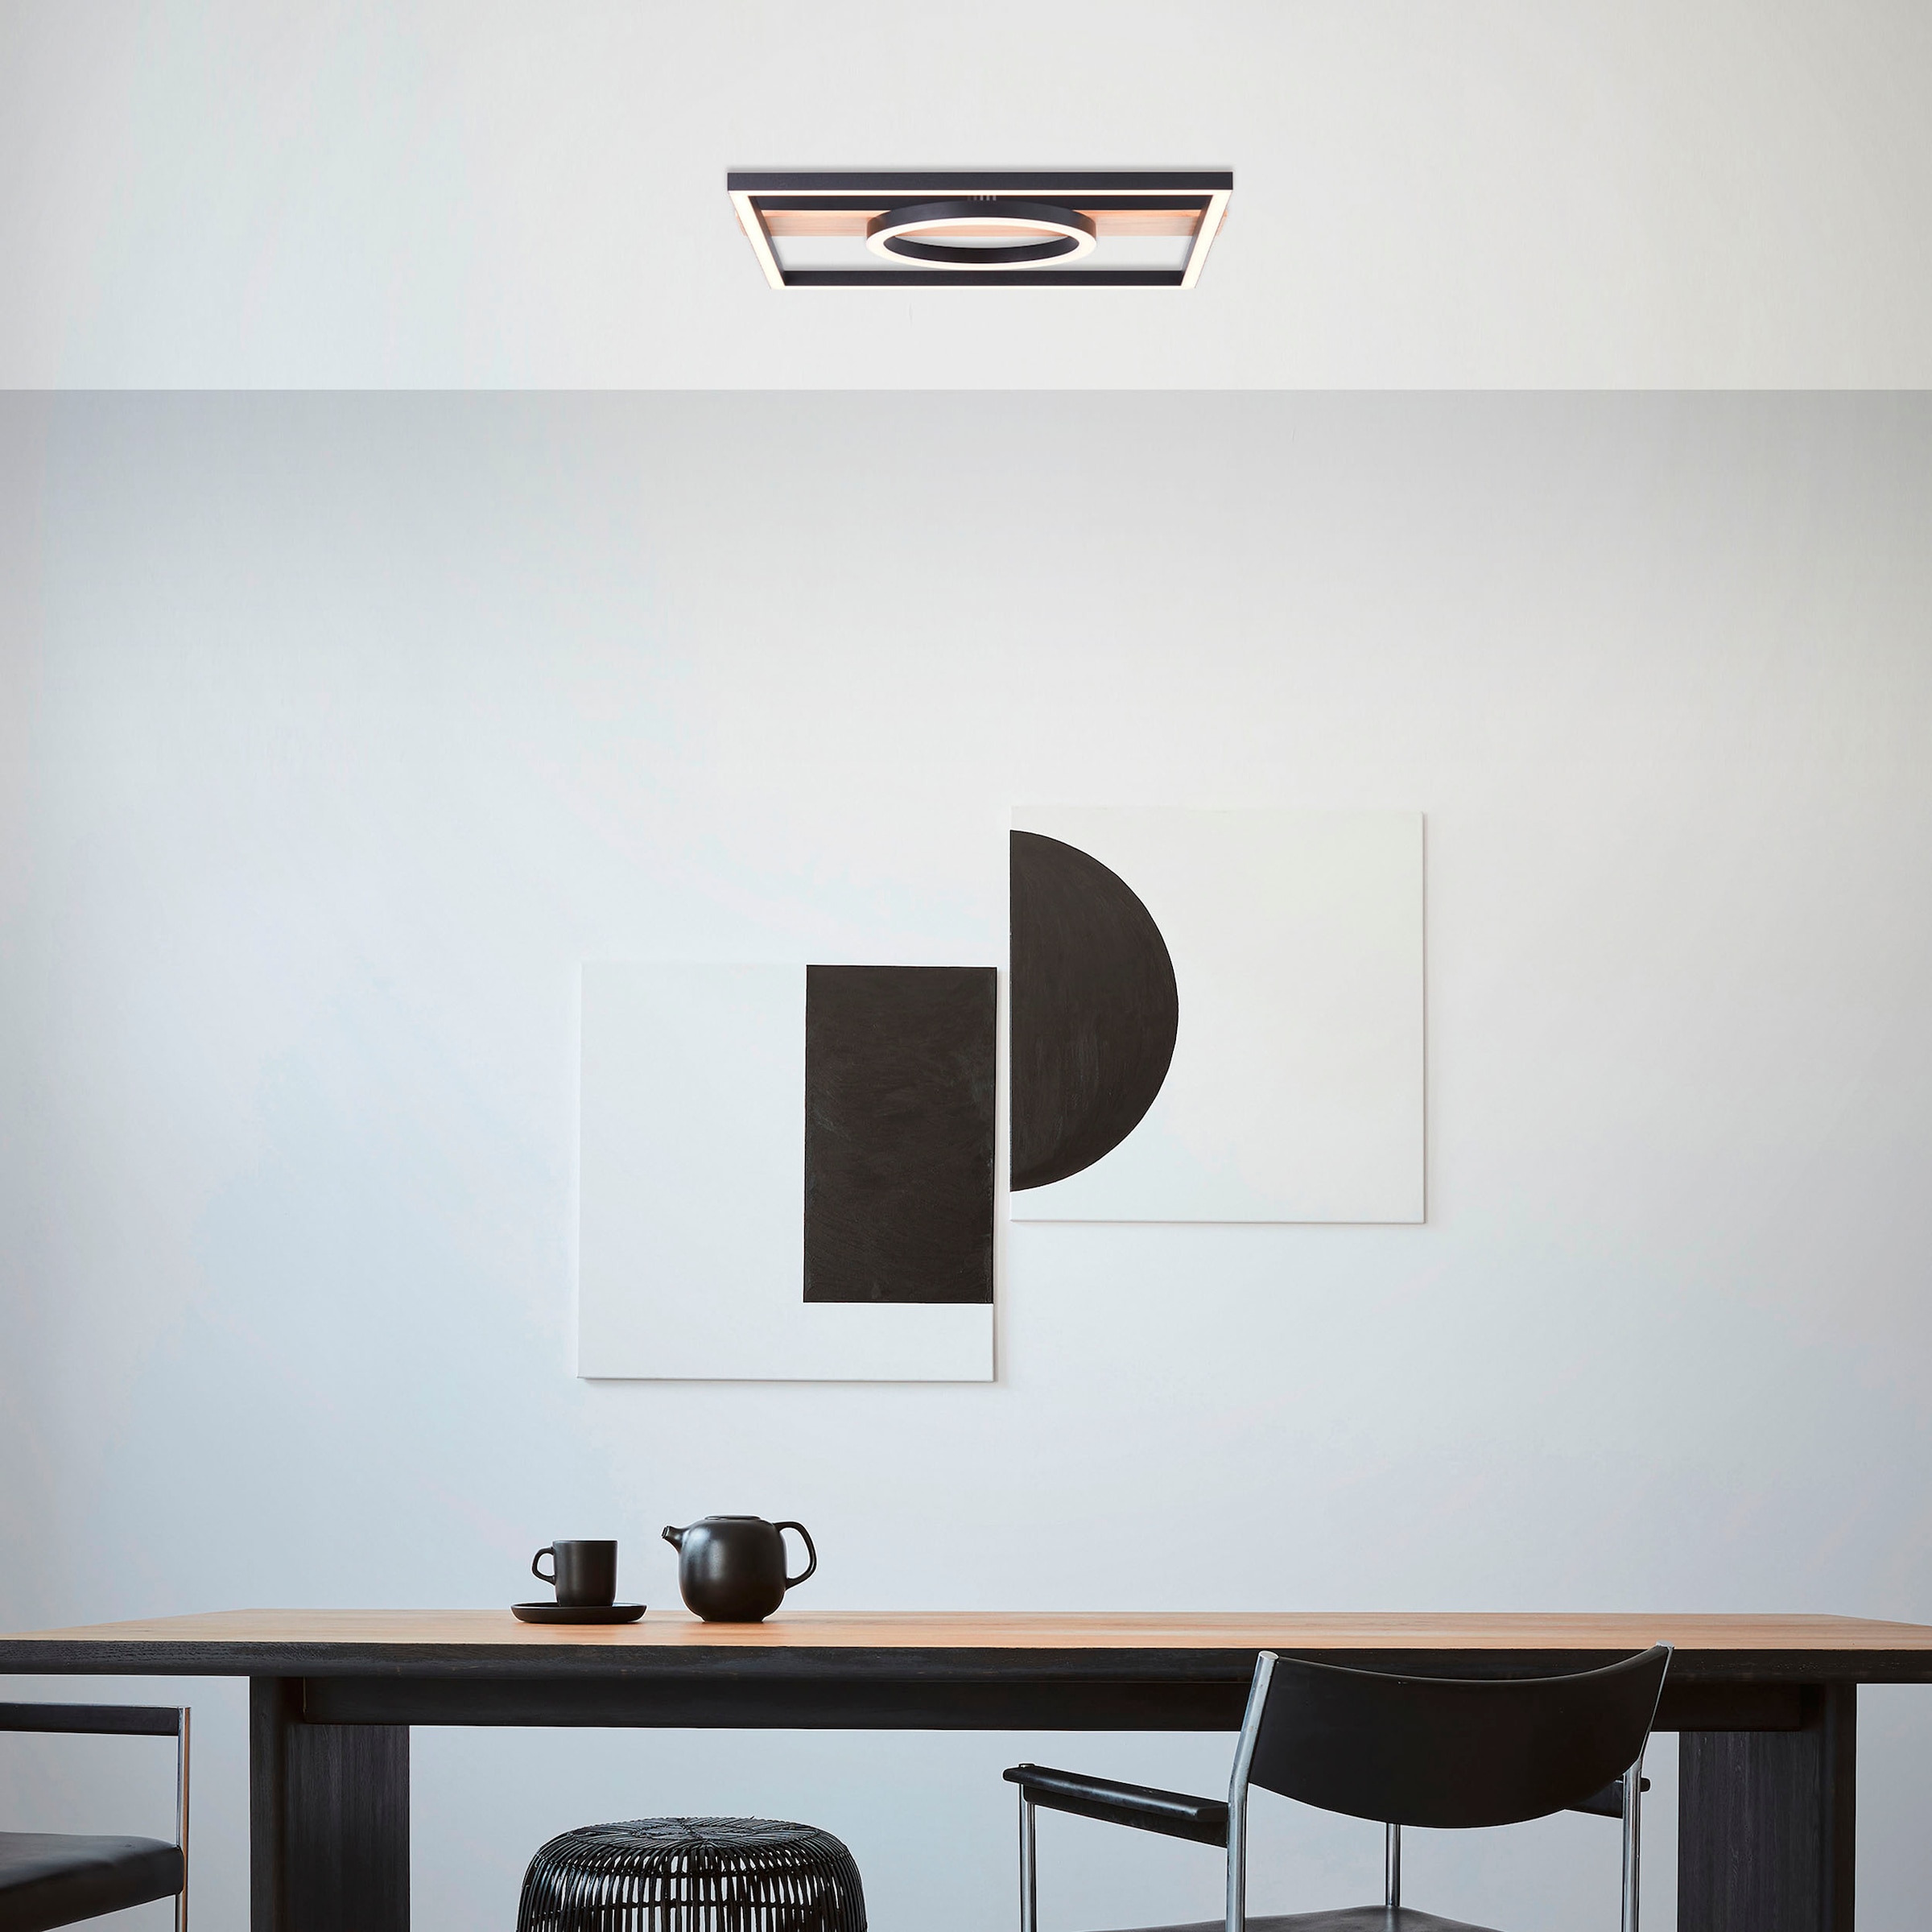 my home LED Deckenleuchte »Lysann Deckenlampe«, Leuchtmittel LED-Board | LED fest integriert, 42 x 40 cm, 24 W, 2700 lm, 3000 K, Holz/Metall, braun/schwarz